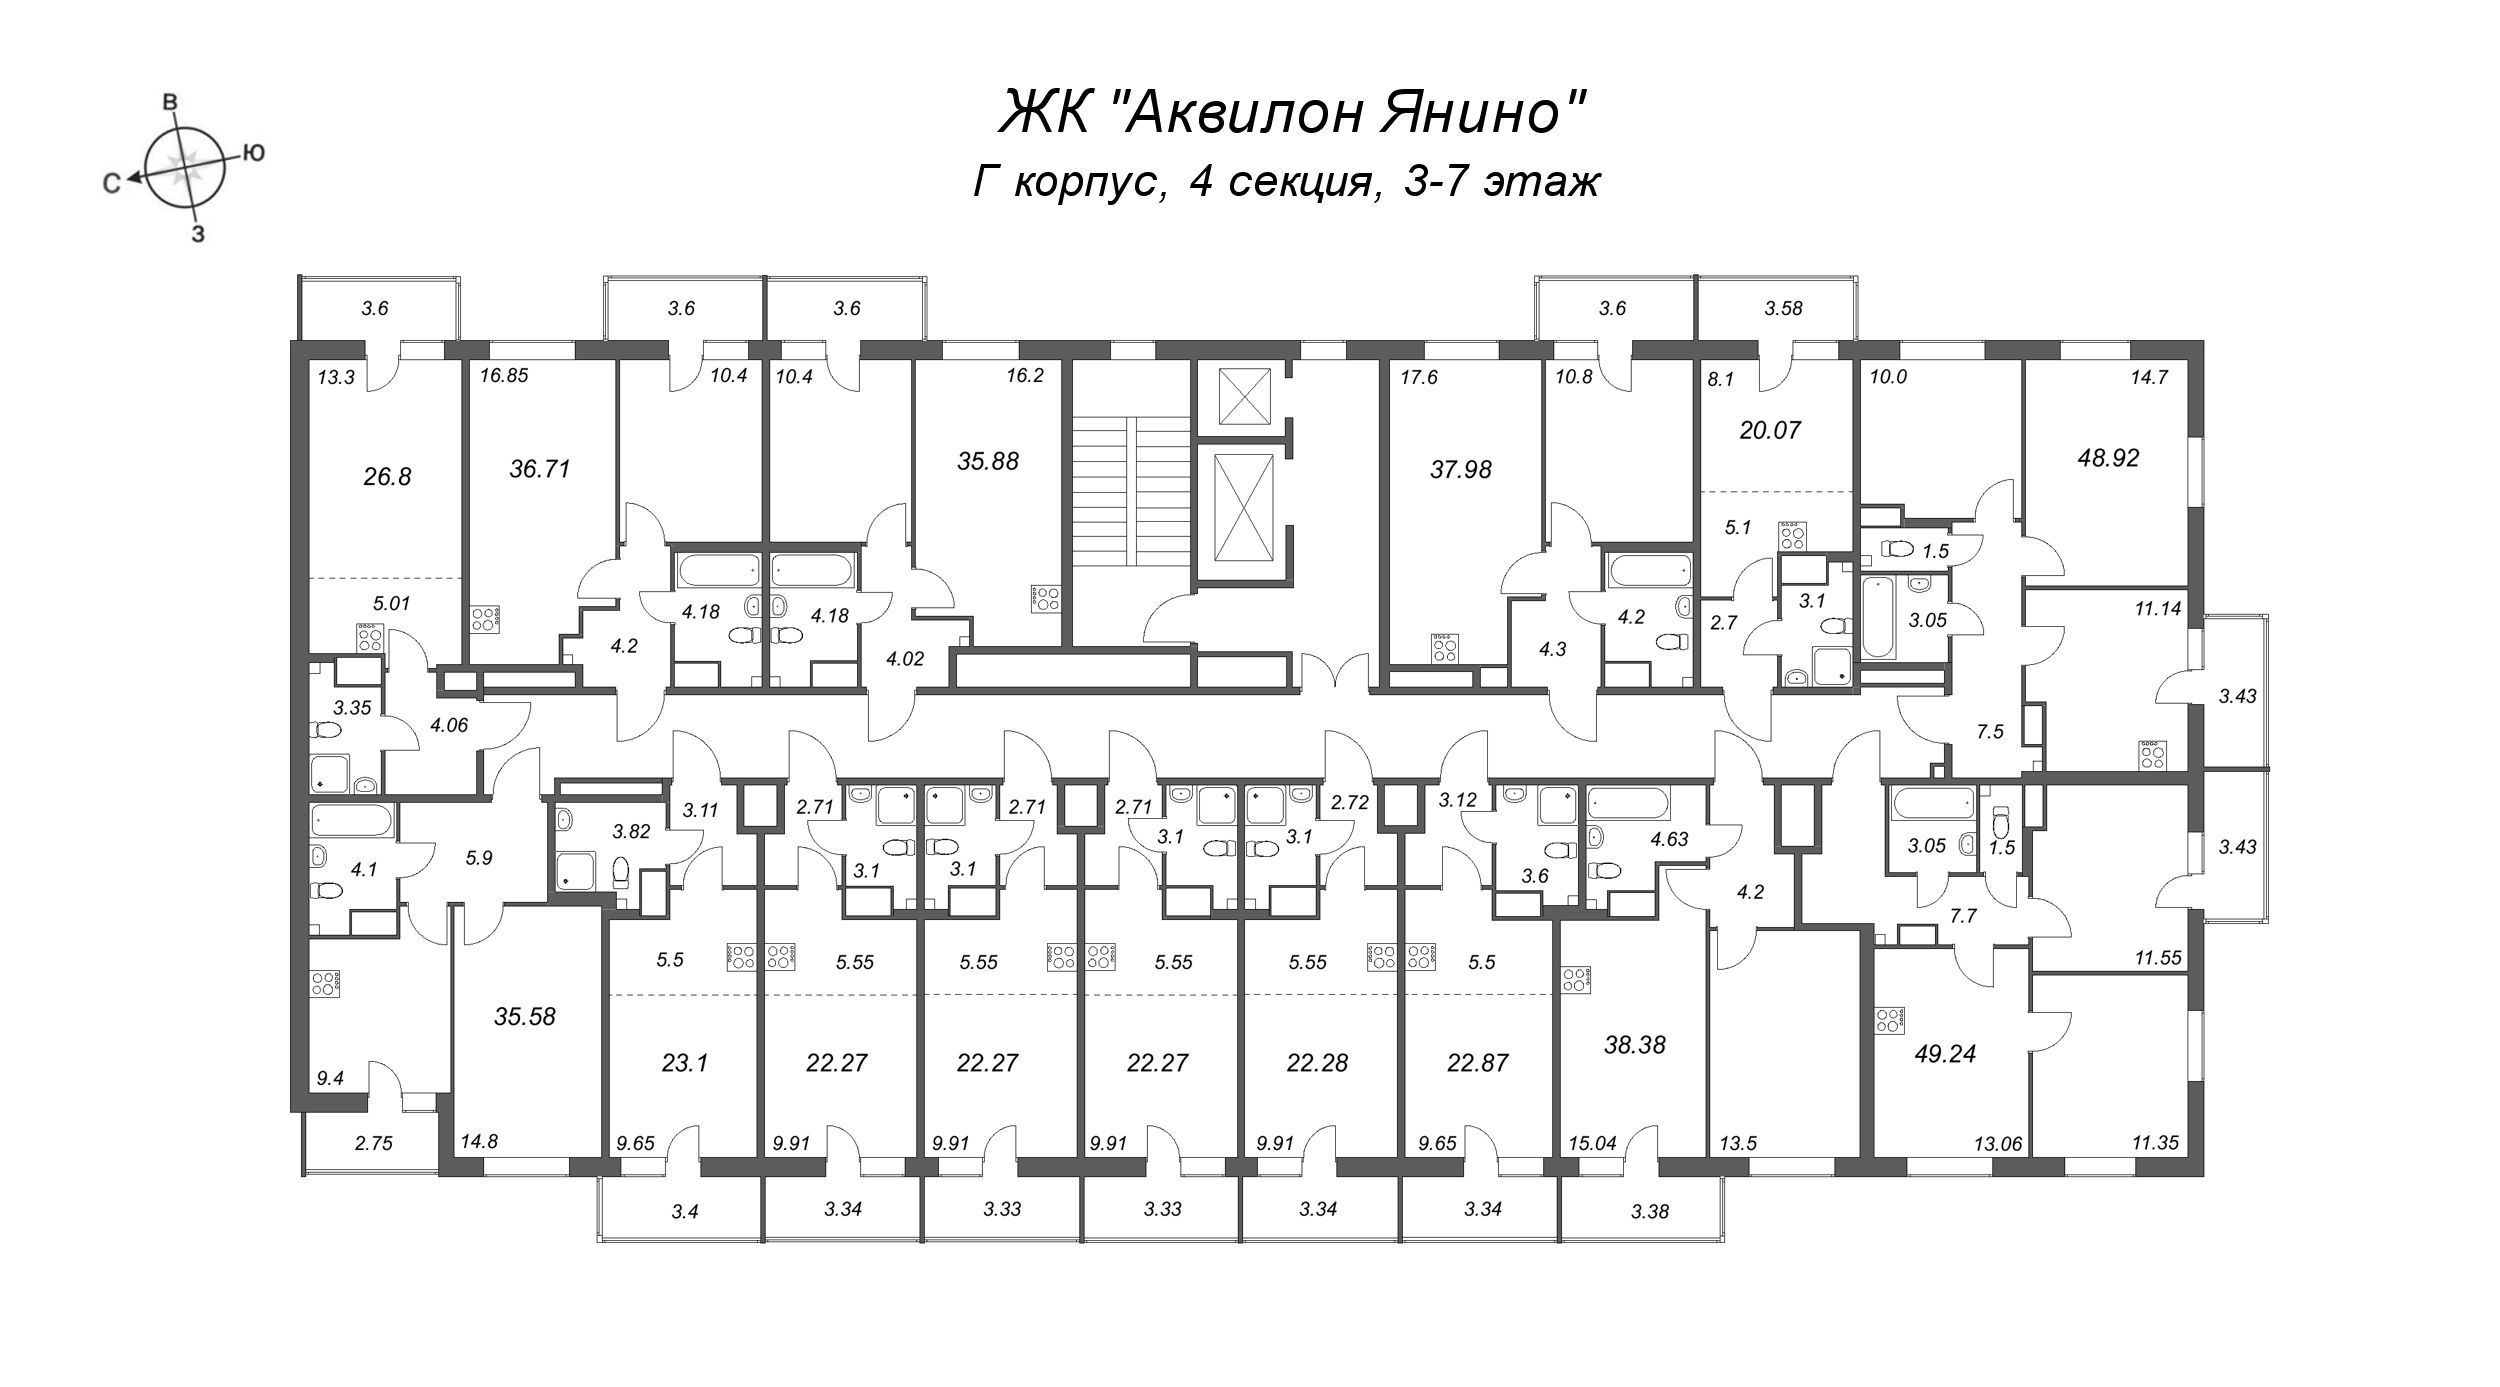 2-комнатная (Евро) квартира, 35.88 м² - планировка этажа